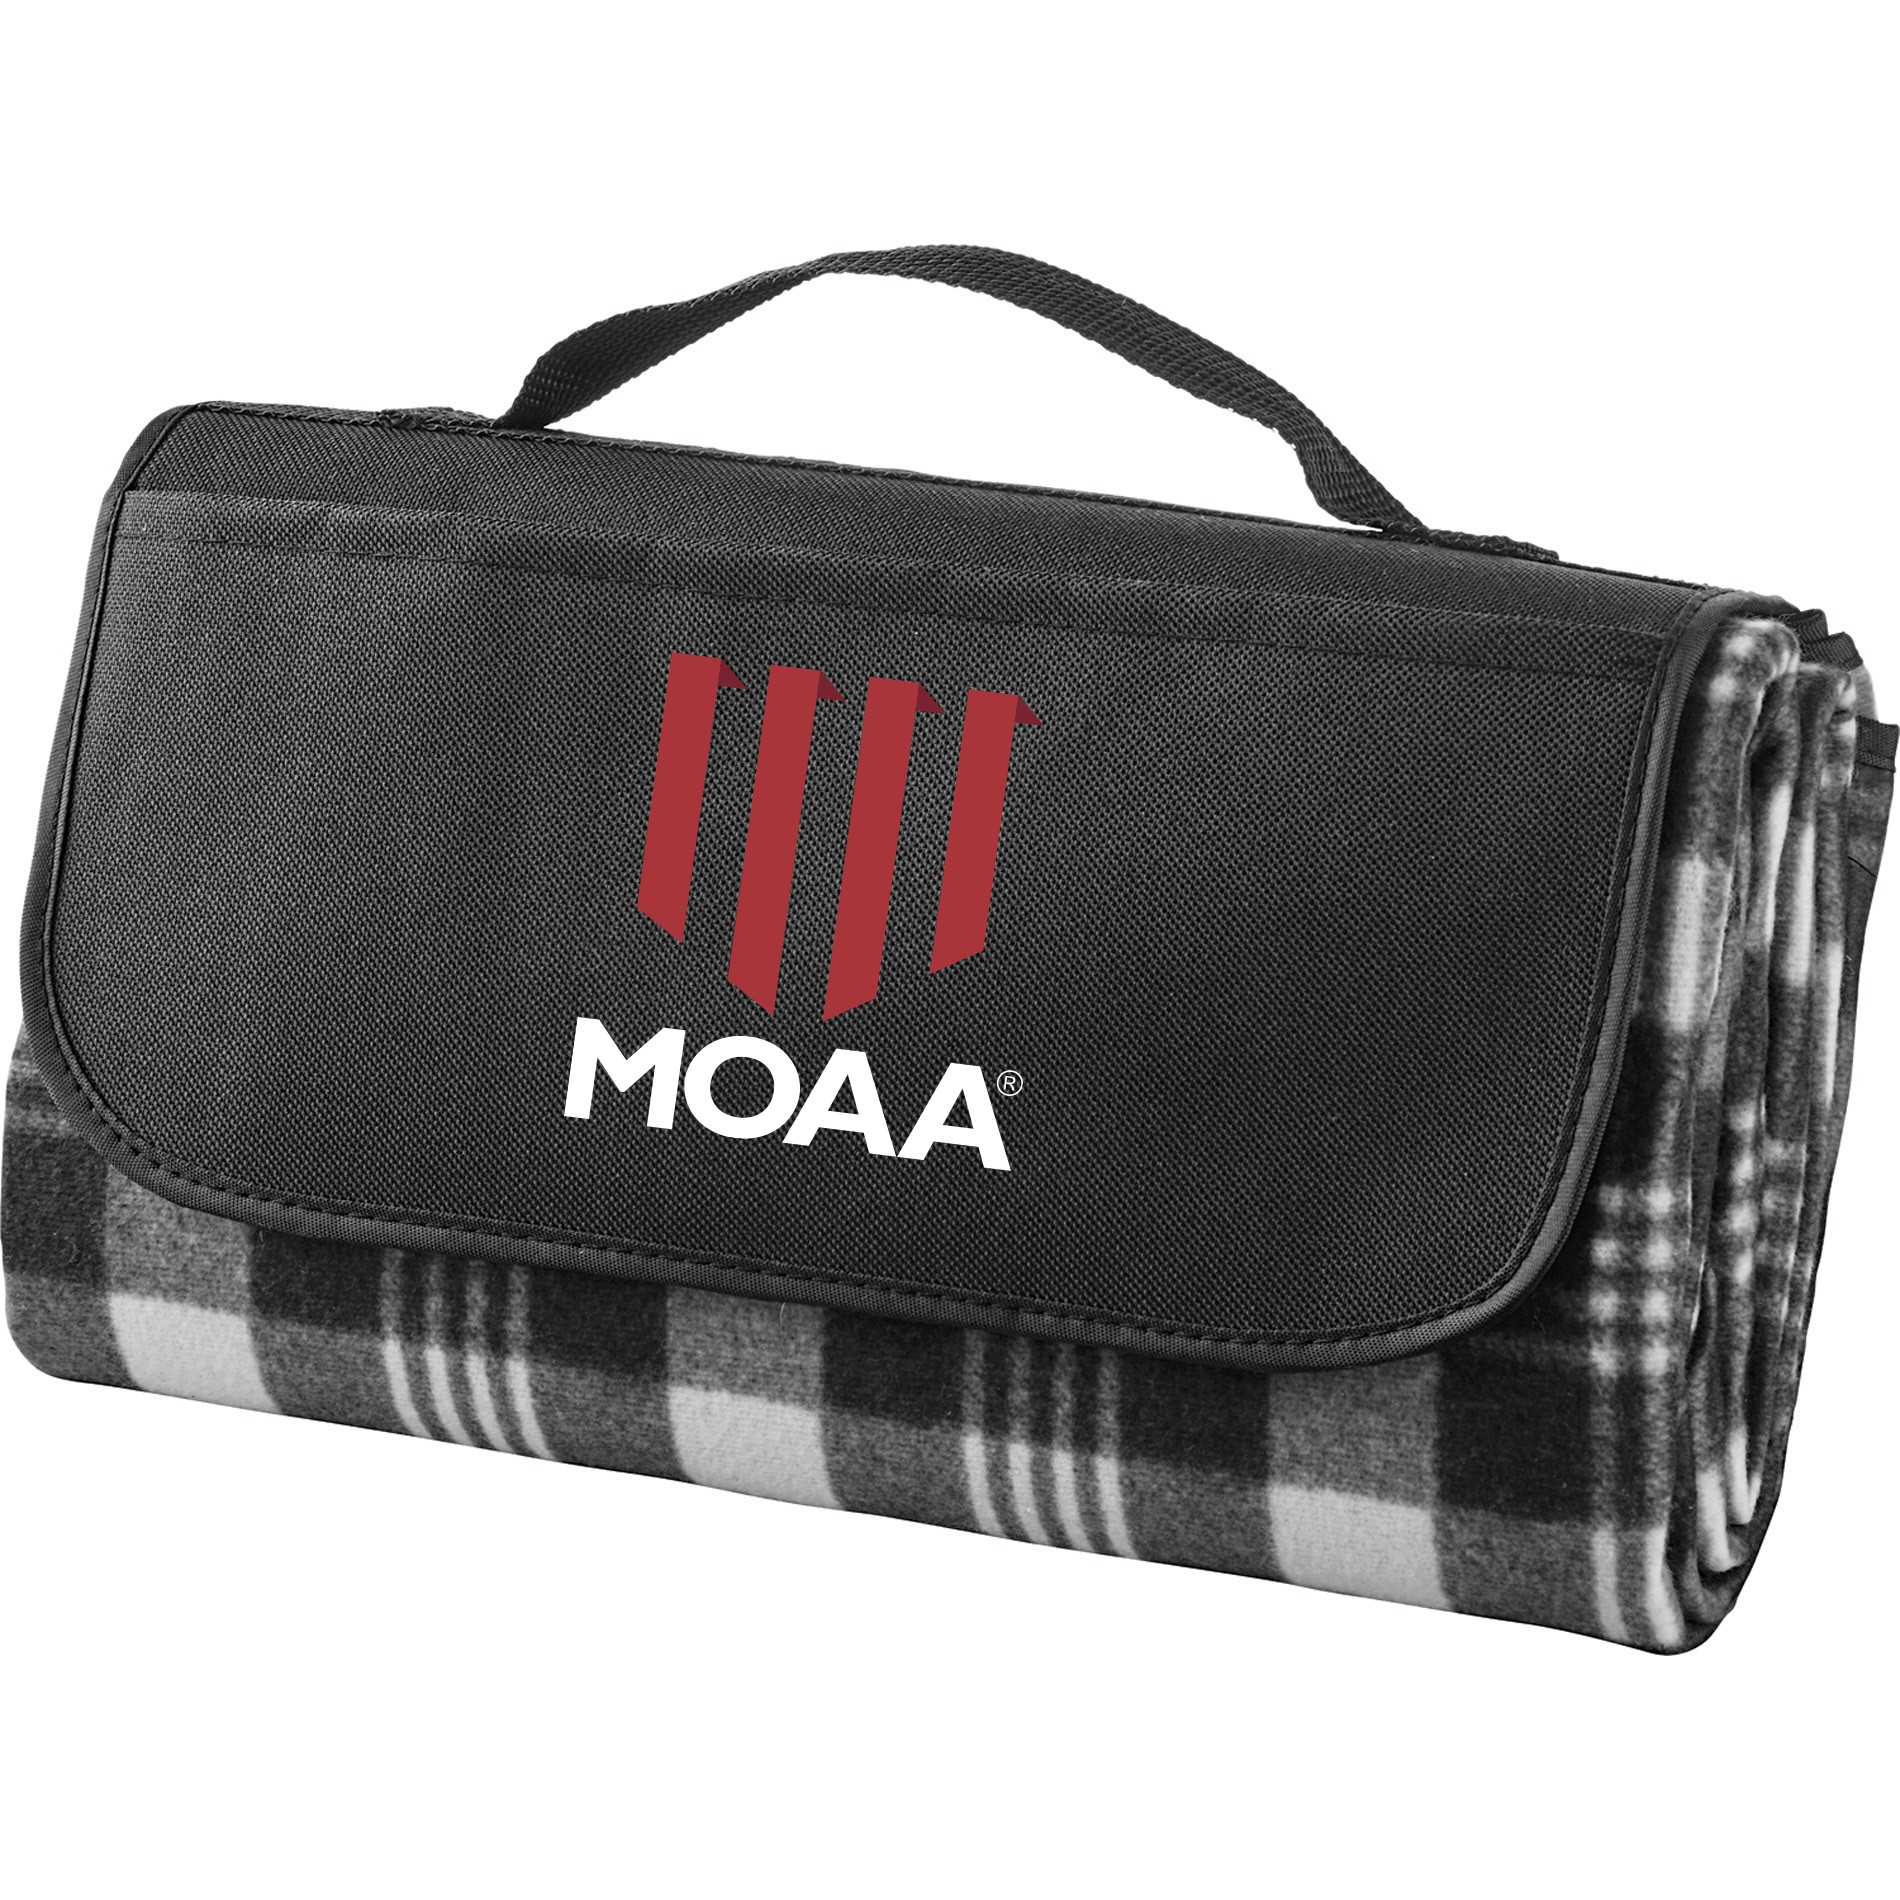 moaa-store-bag.jpg